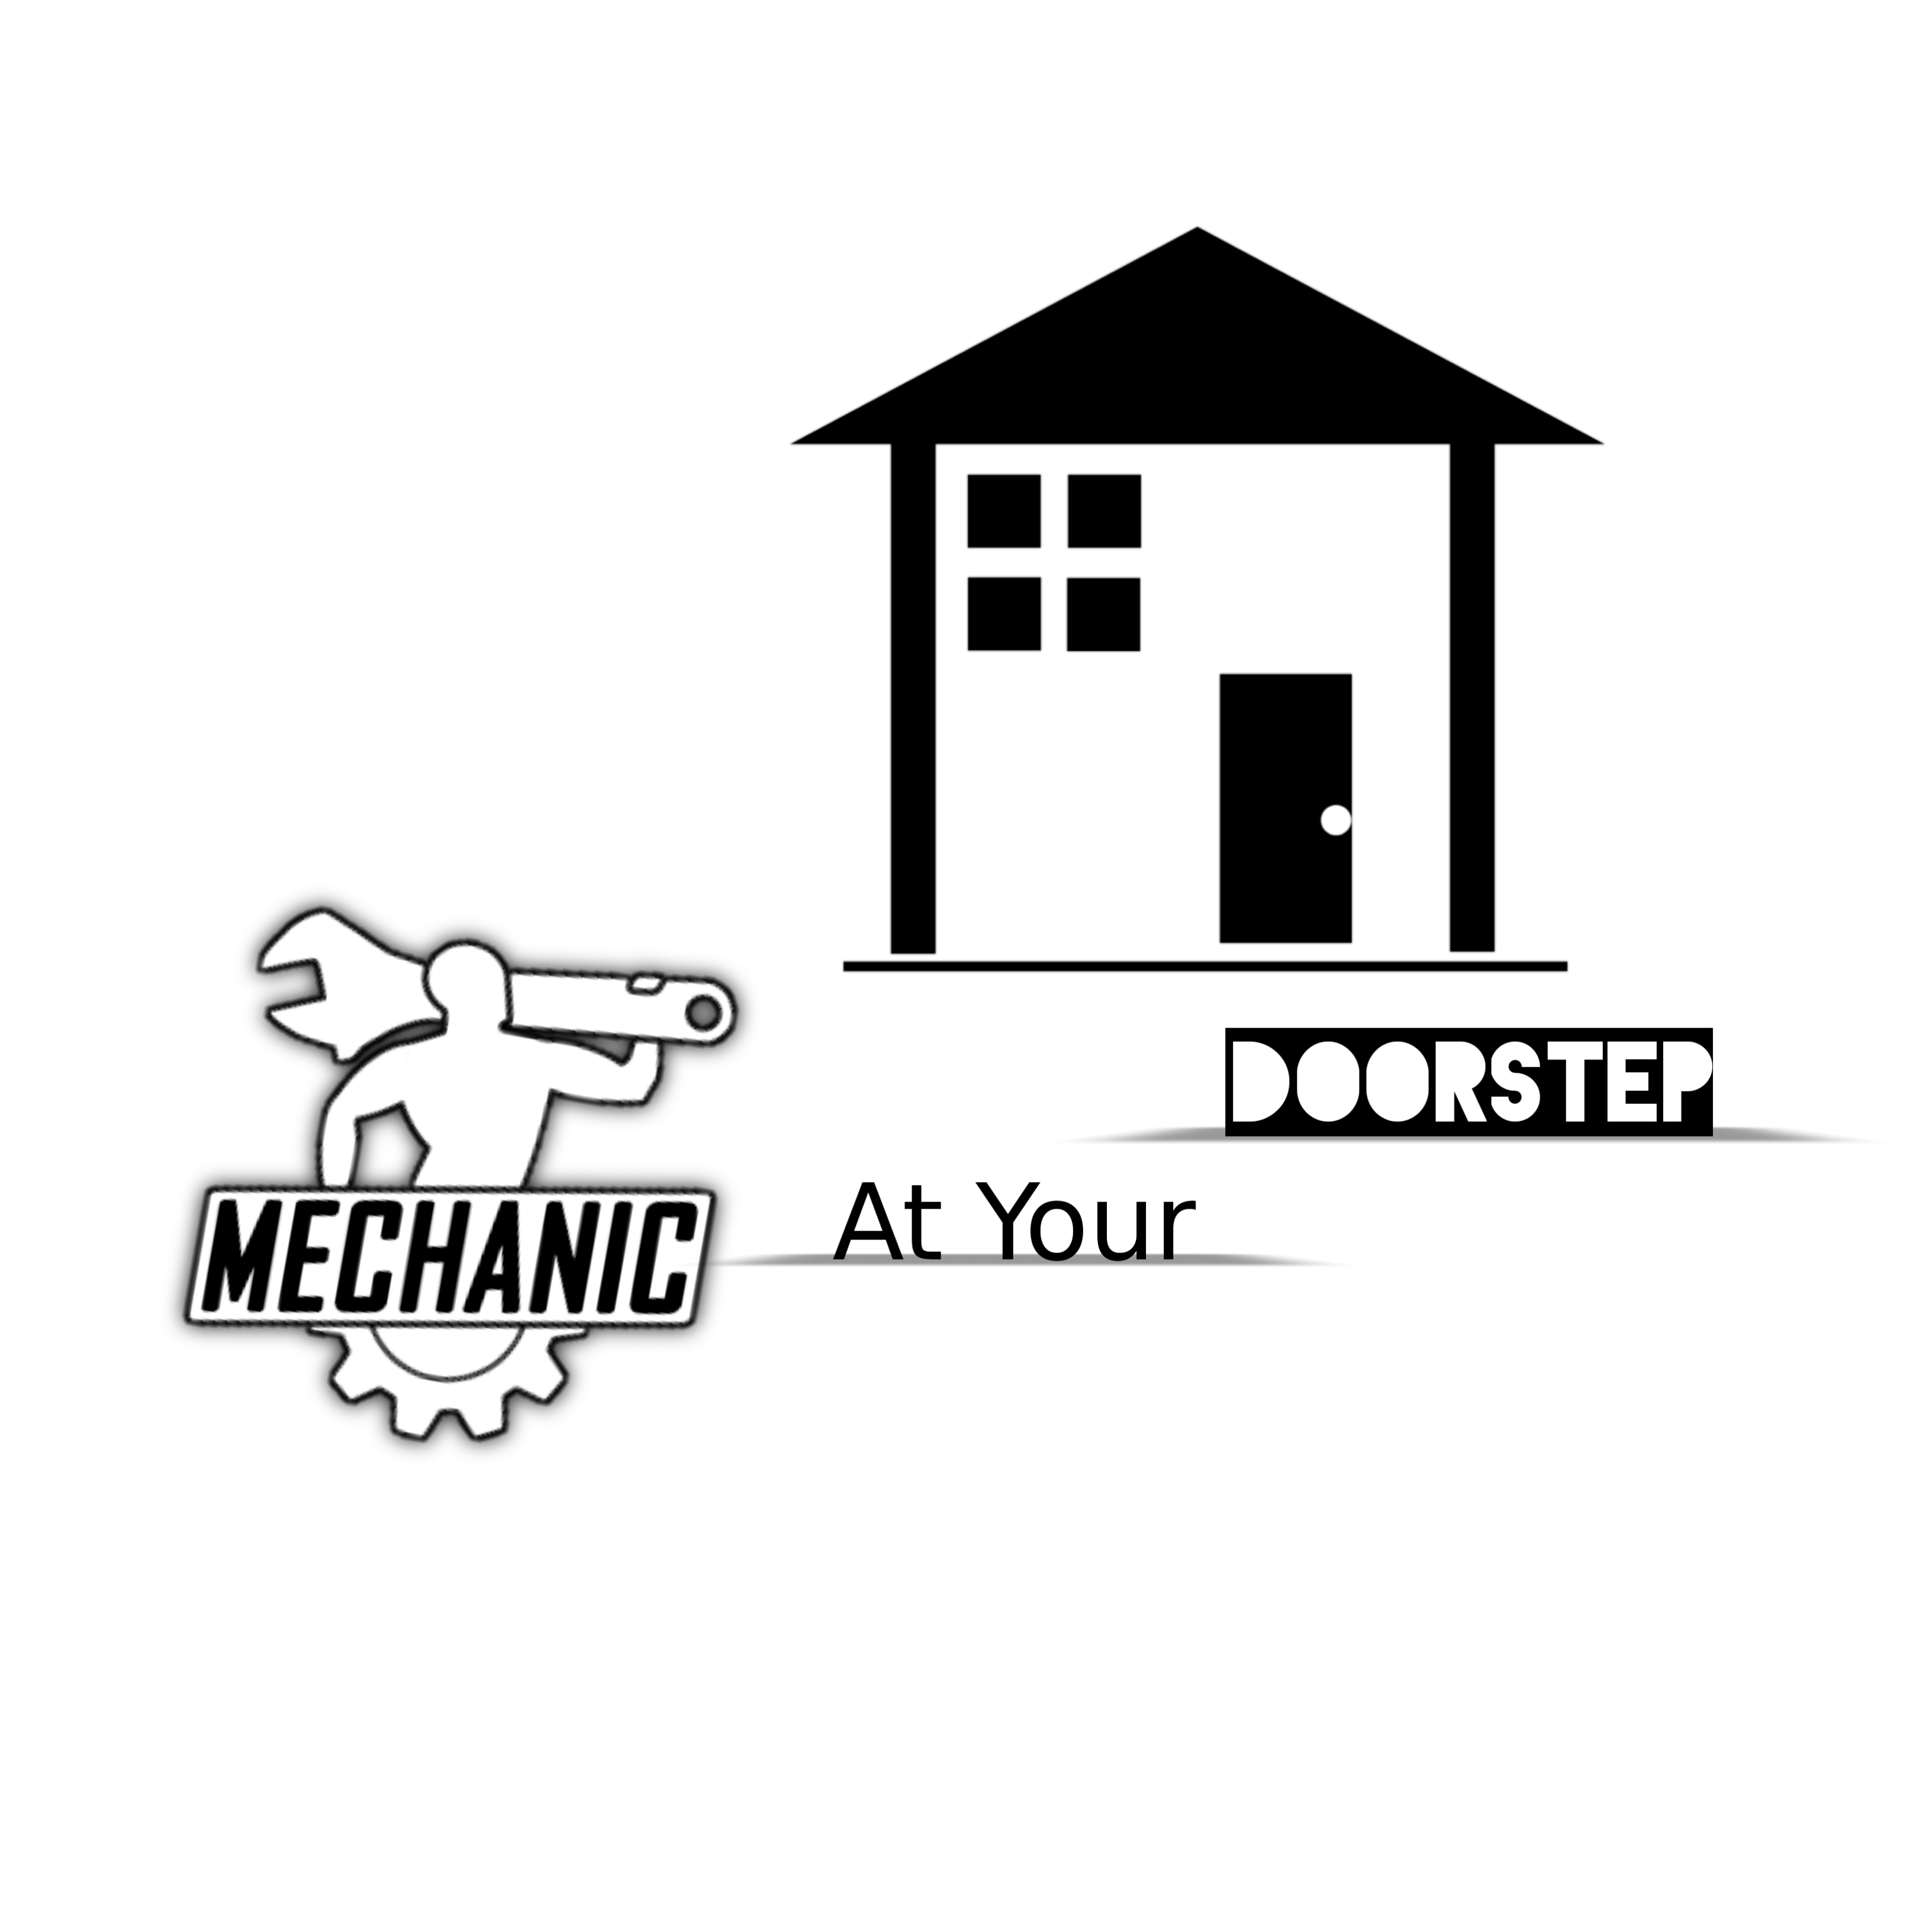 Mechanic At Your Doorstep